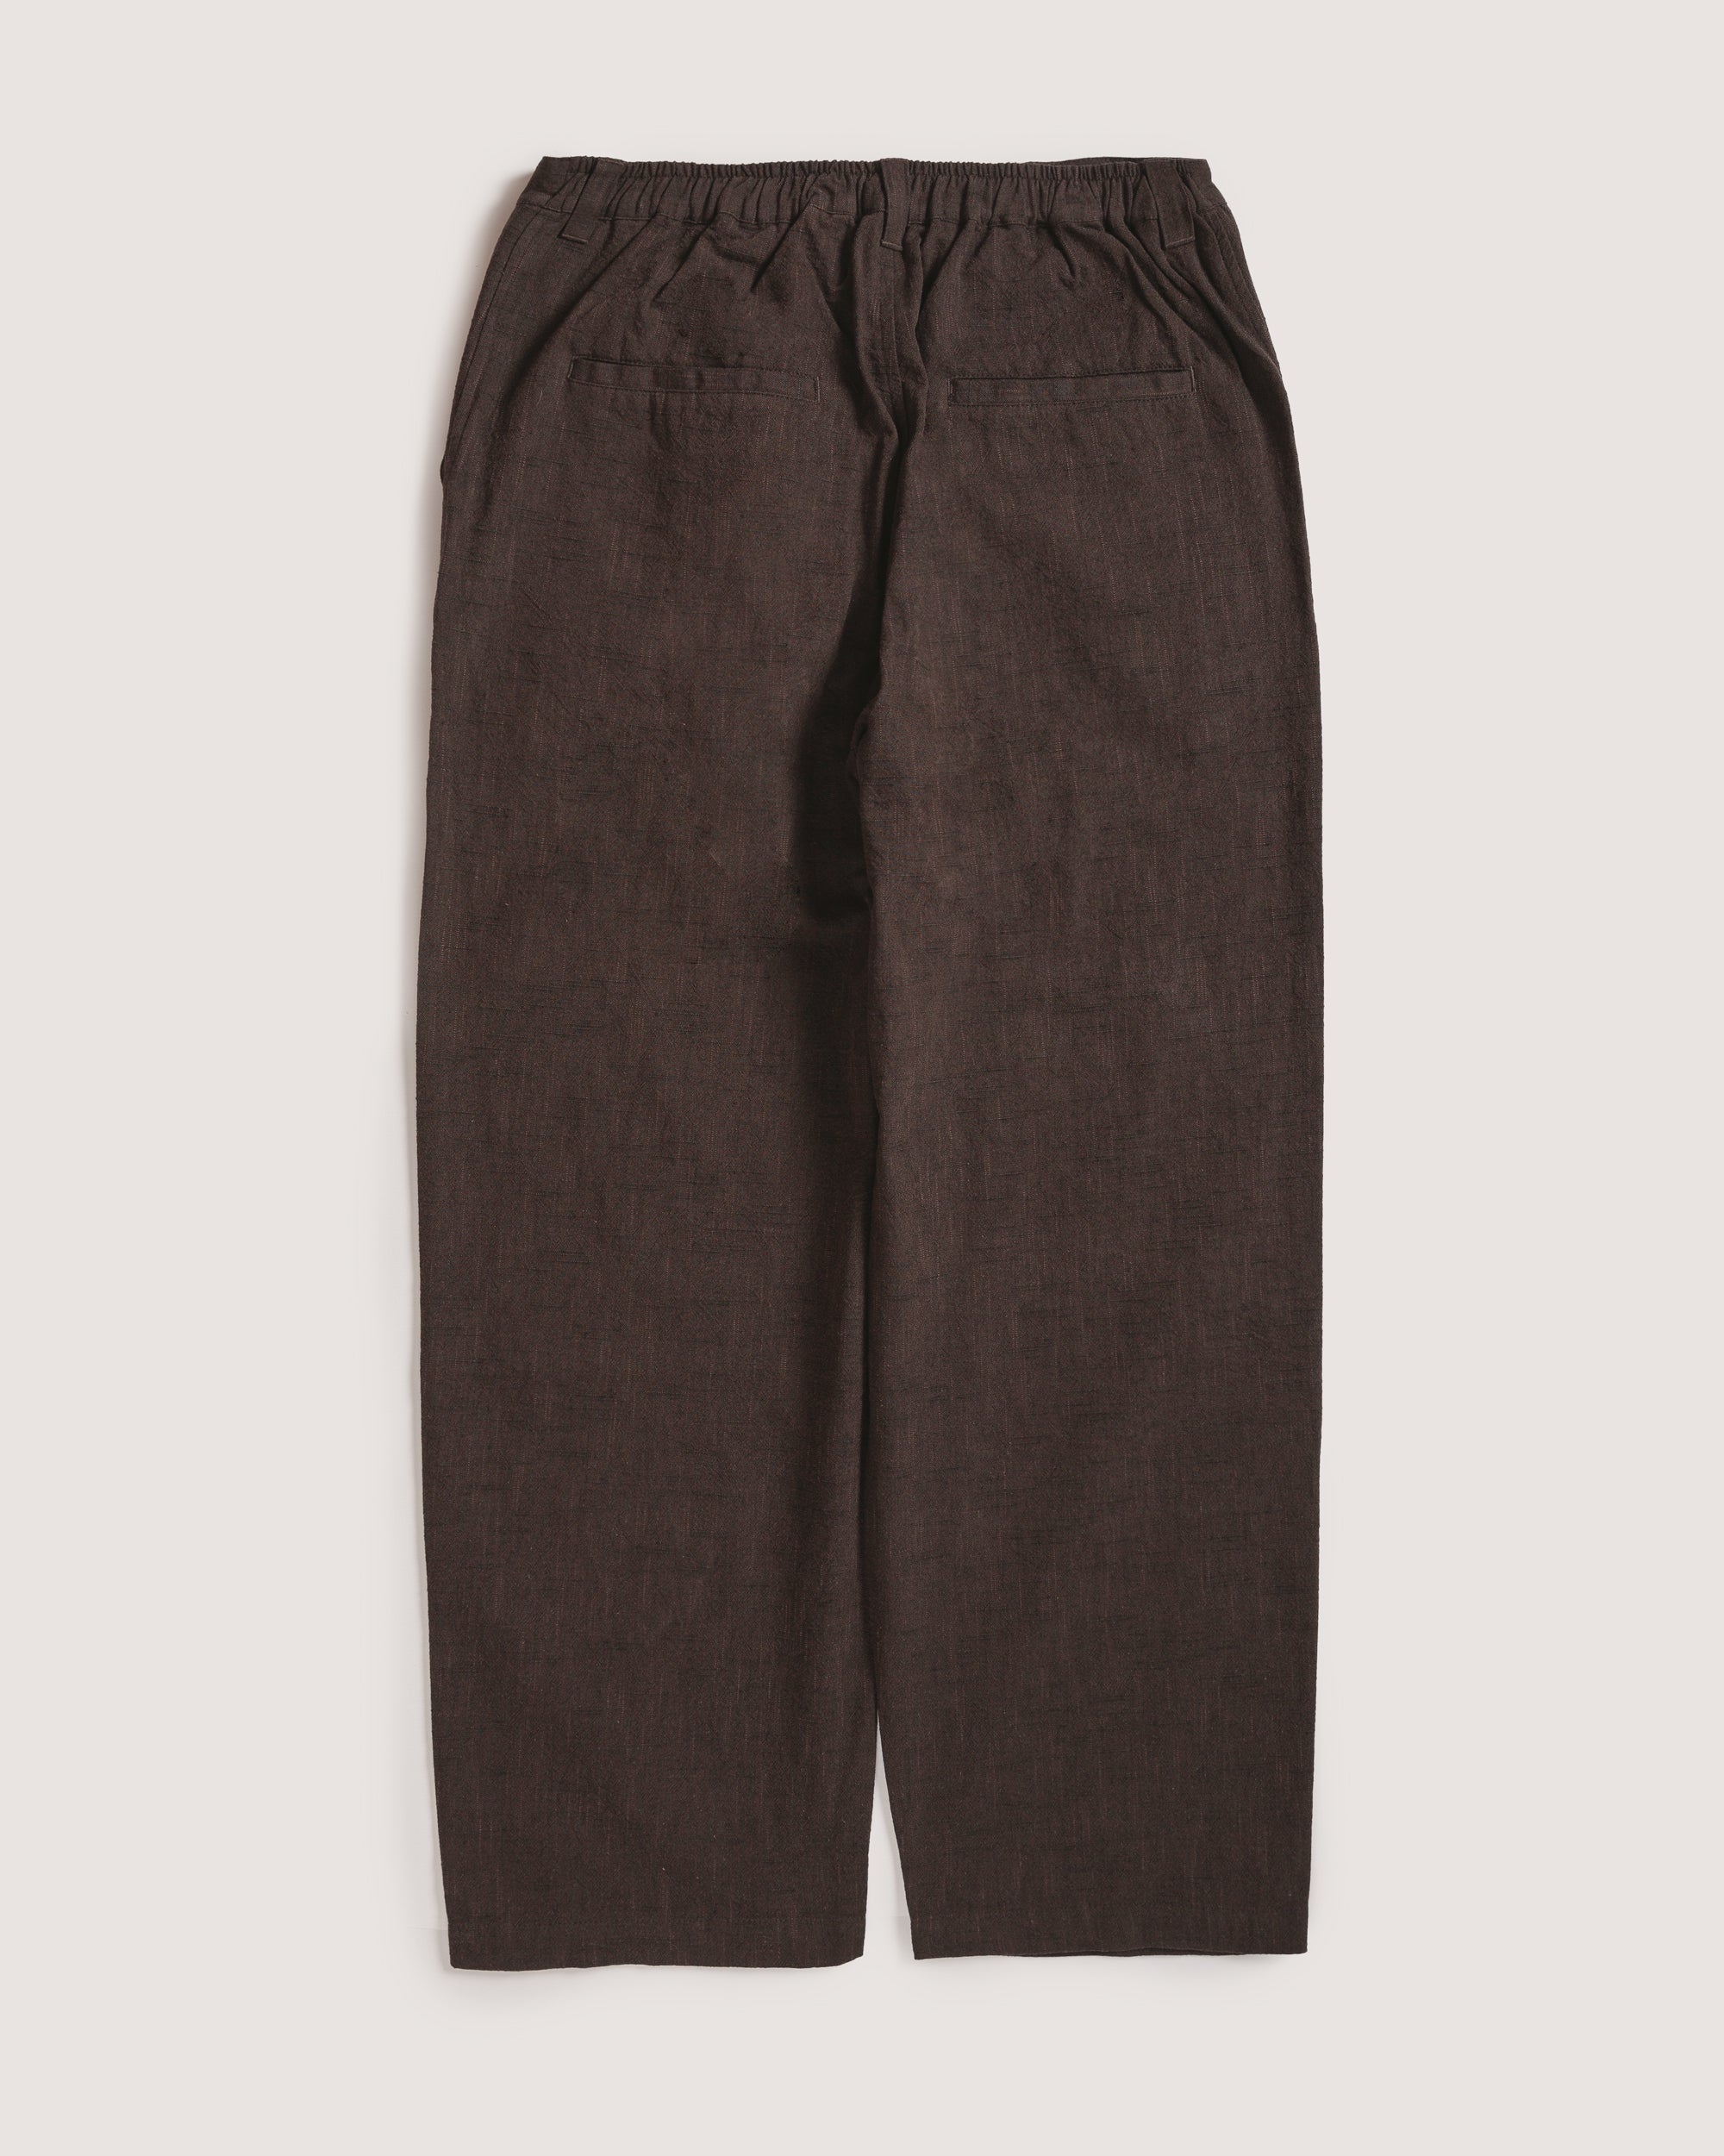 Drawstring LinenCotton Trousers  High Waist  Dark Brown  Granqvist   Ties shirts and accessories